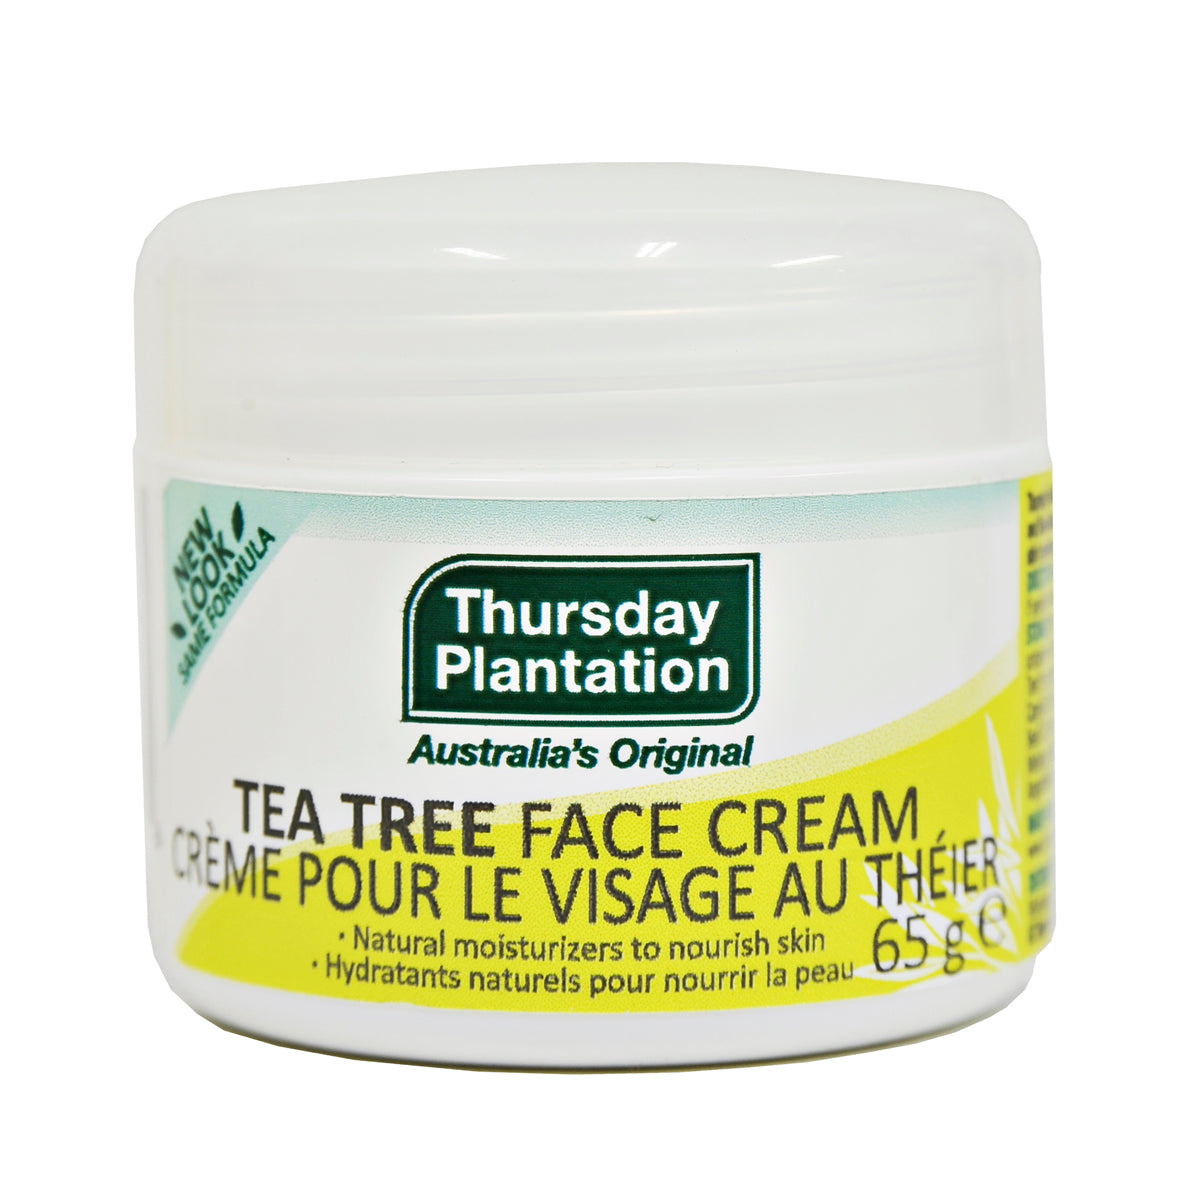 Tea tree face cream (step 3) 65mg